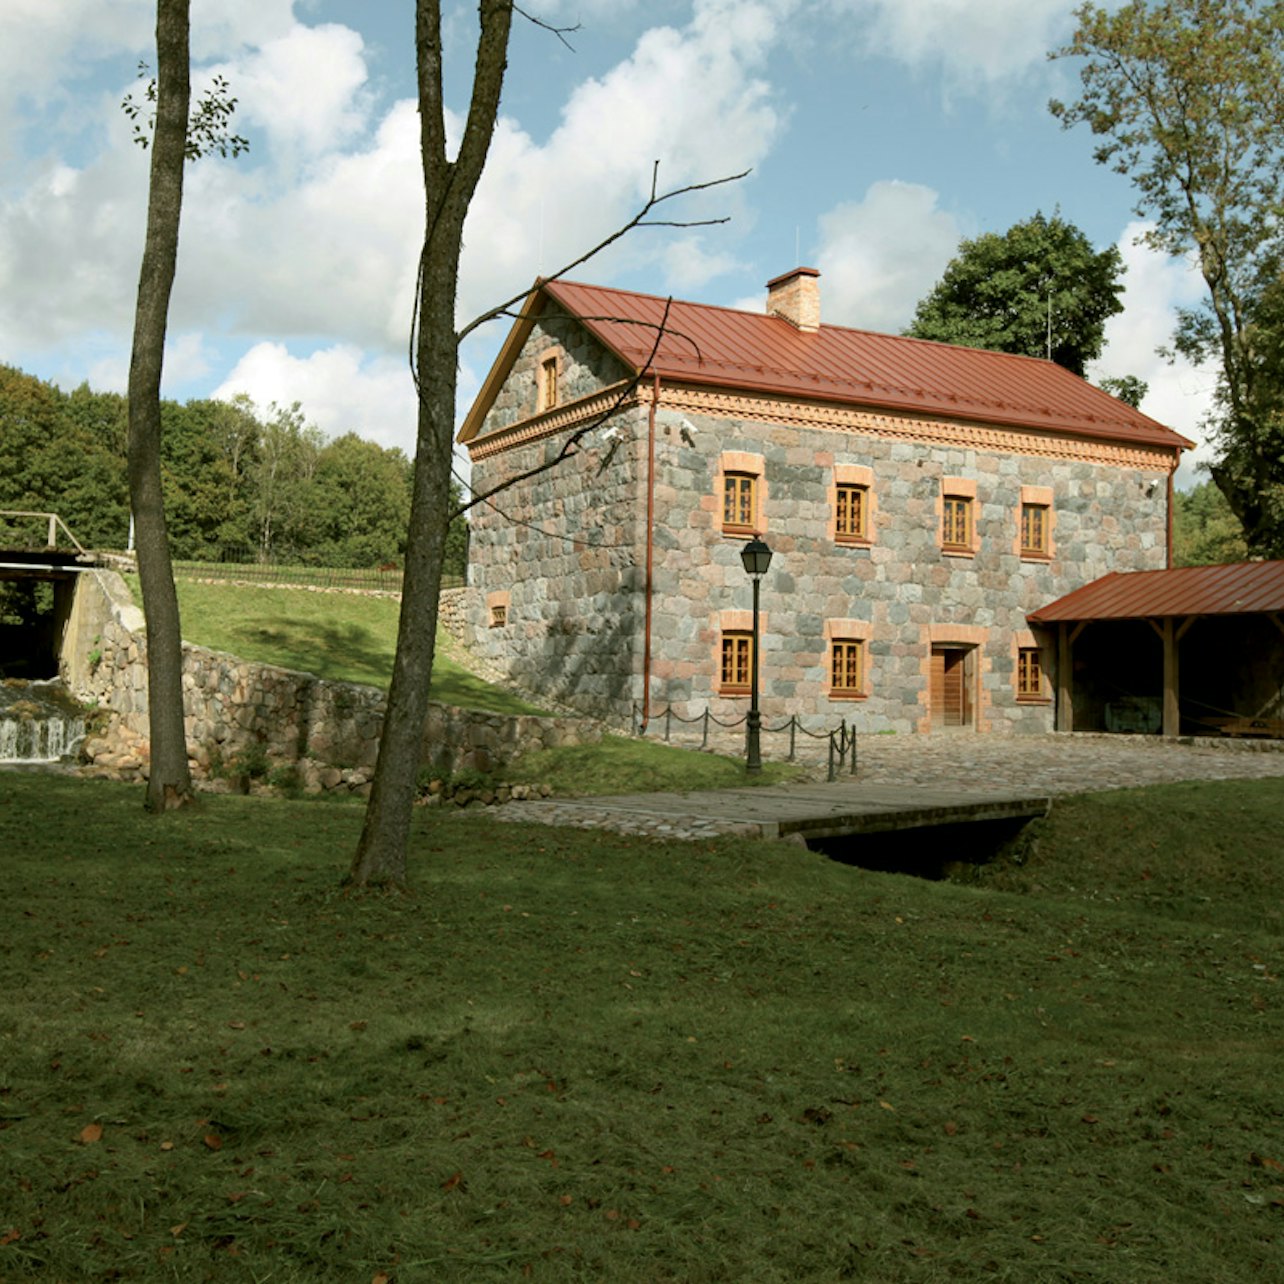 Liubavas Manor-Museum - Accommodations in Vilnius